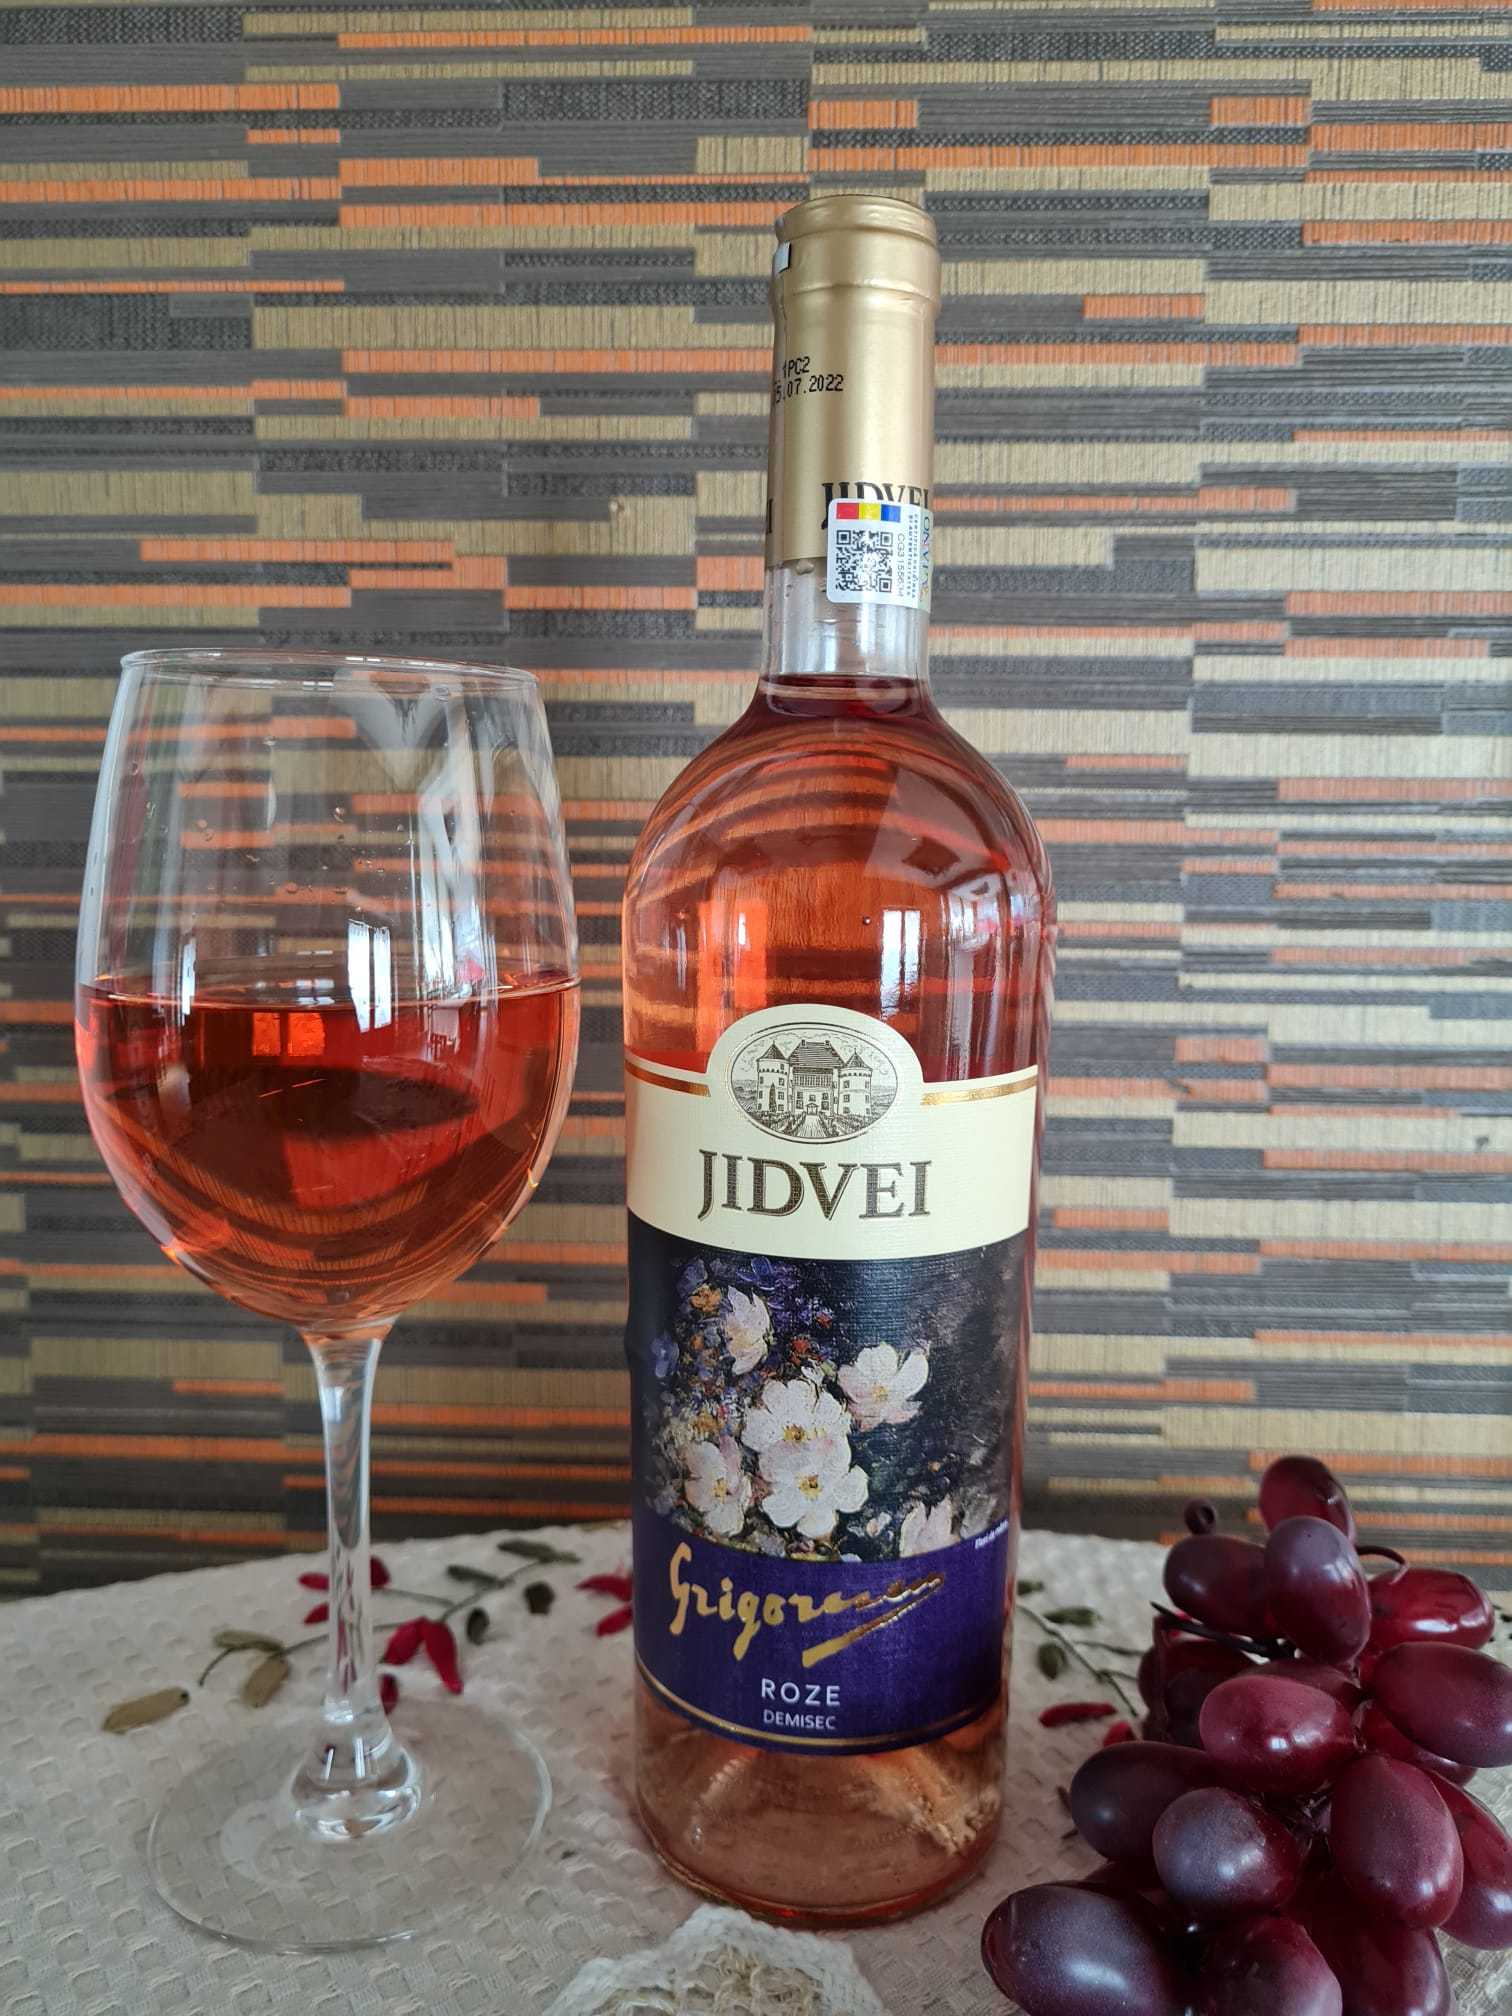 Roze de Jidvei